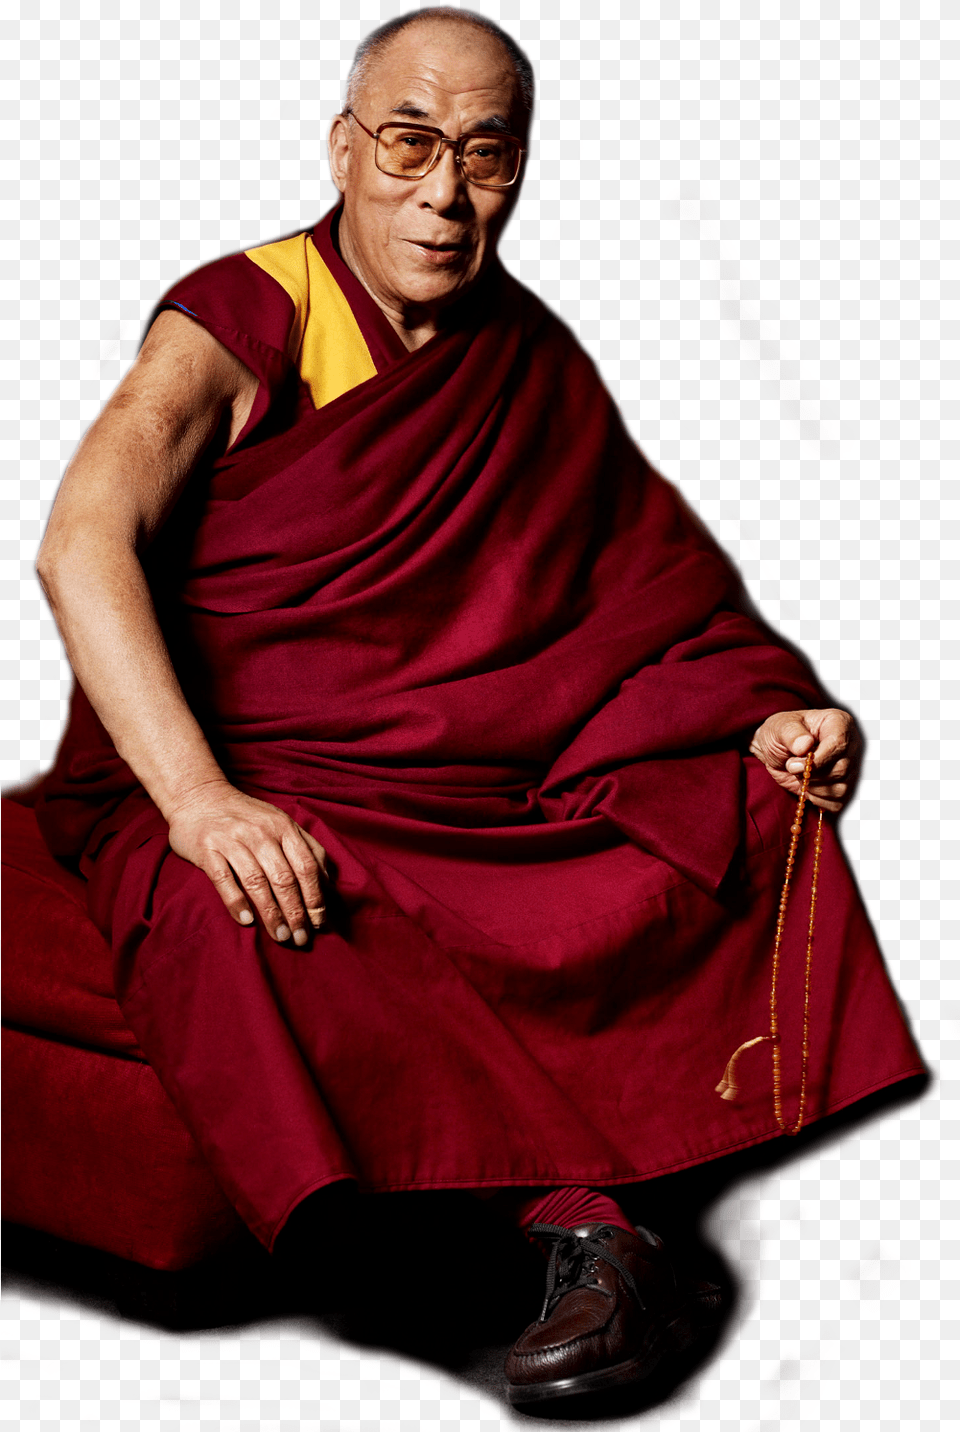 Dalai Lama Image Background 14th Dalai Lama No Background, Adult, Person, Monk, Man Free Png Download